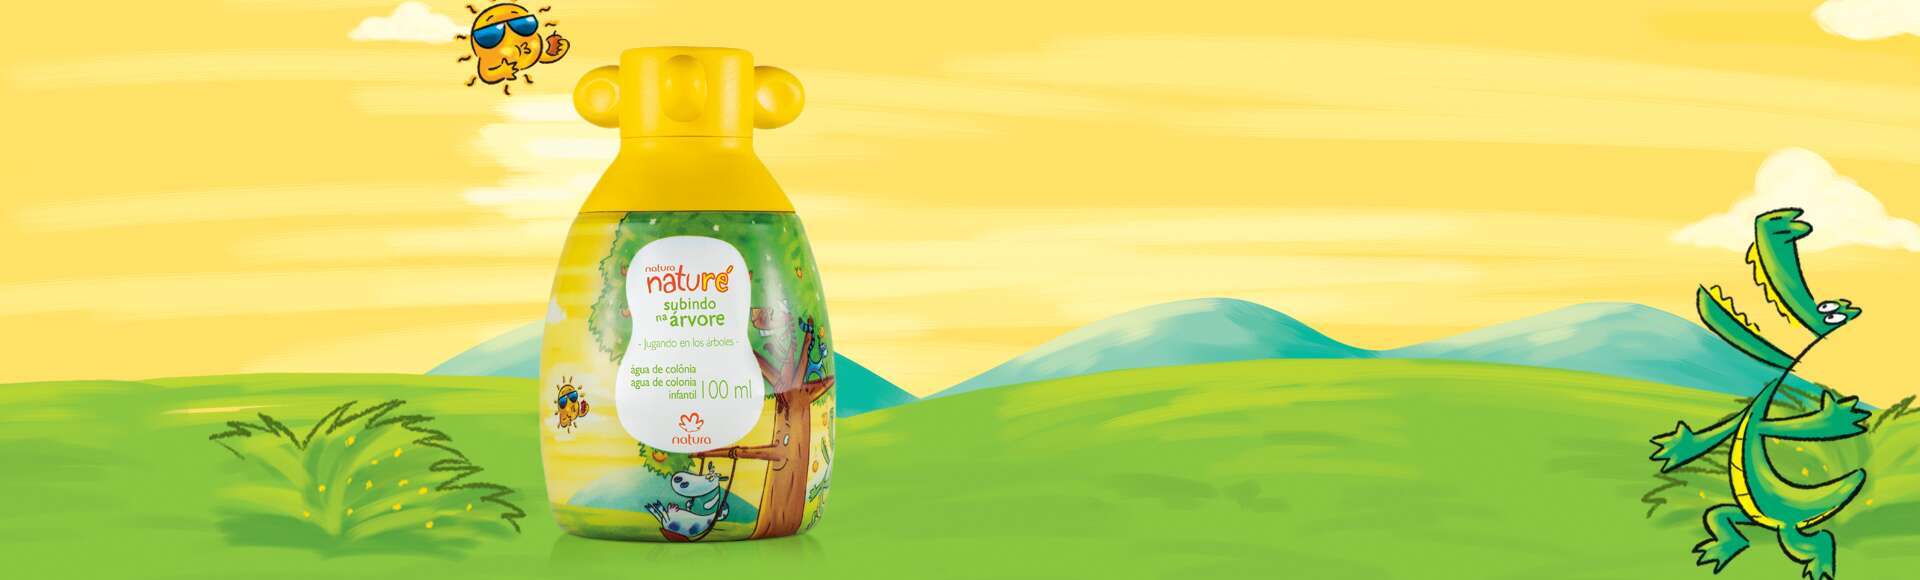 Pibe's Cologne for Kids Citrus Aroma, 80 ml / 2.7 fl oz — Latinafy